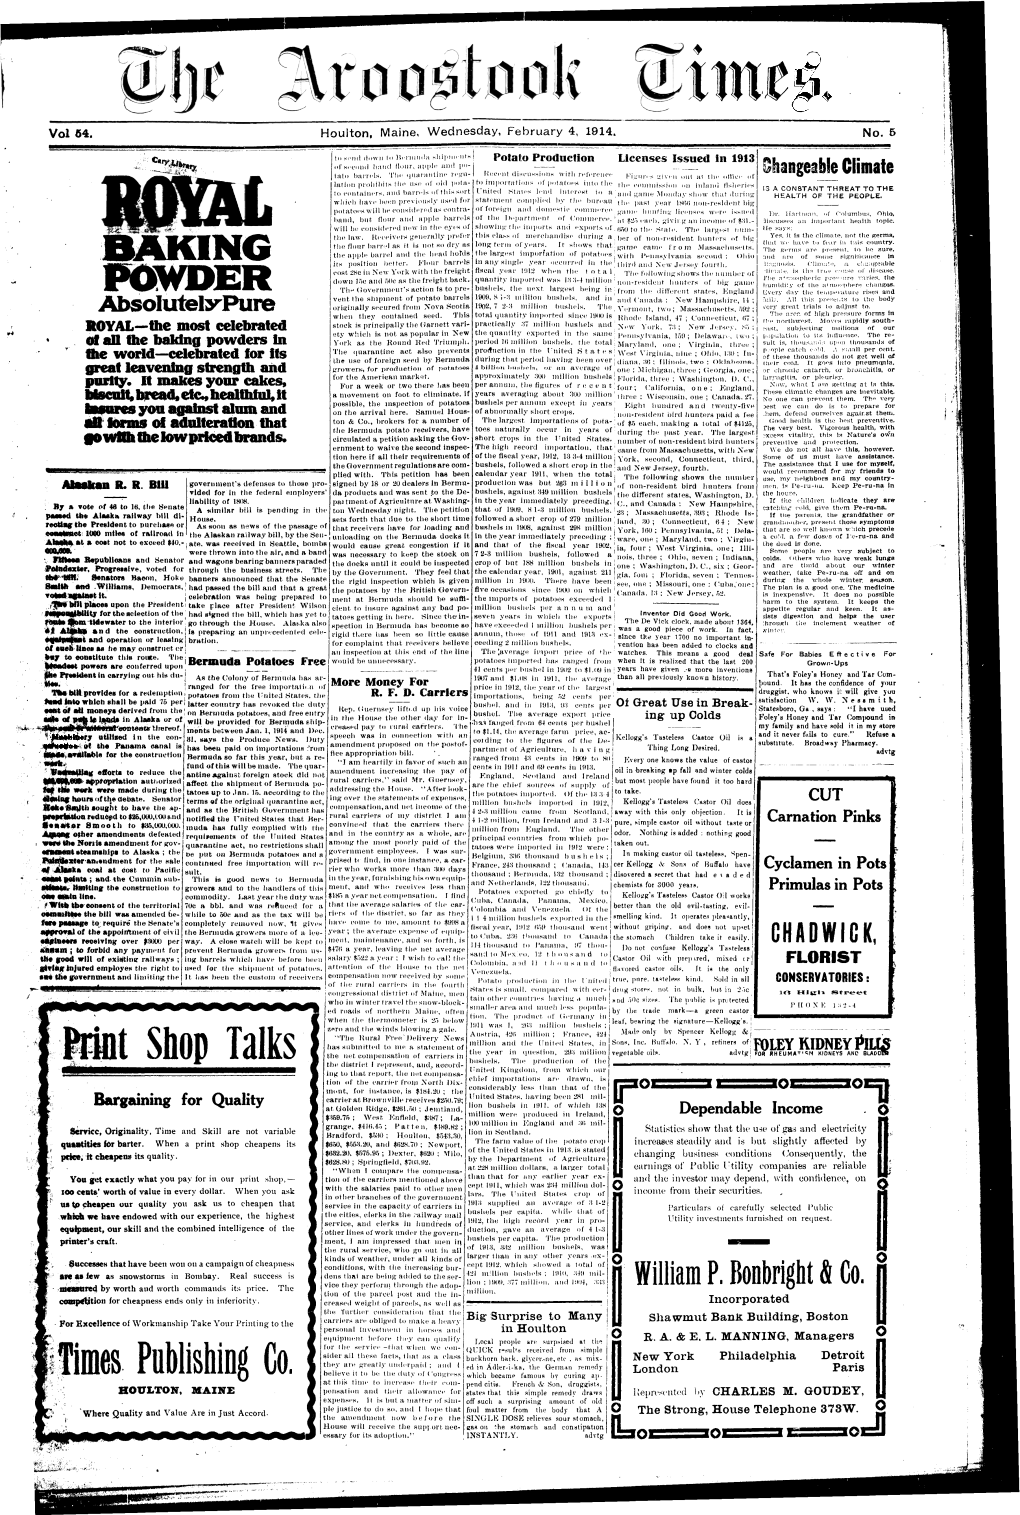 The Aroostook Times, February 4, 1914